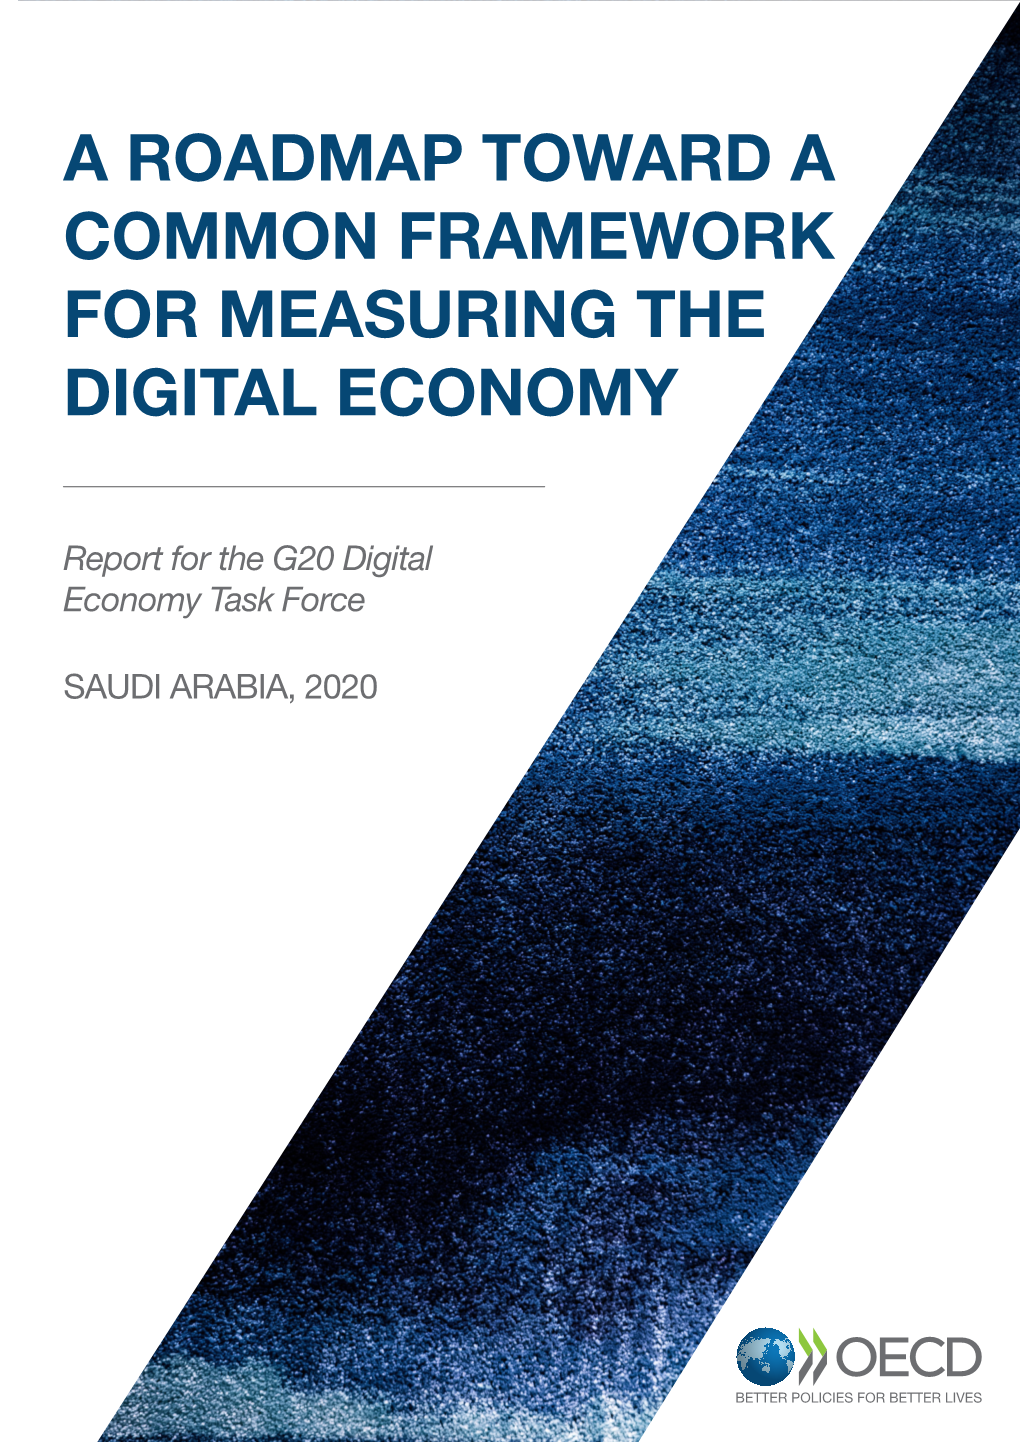 A Common Framework for Measuring the Digital Economy